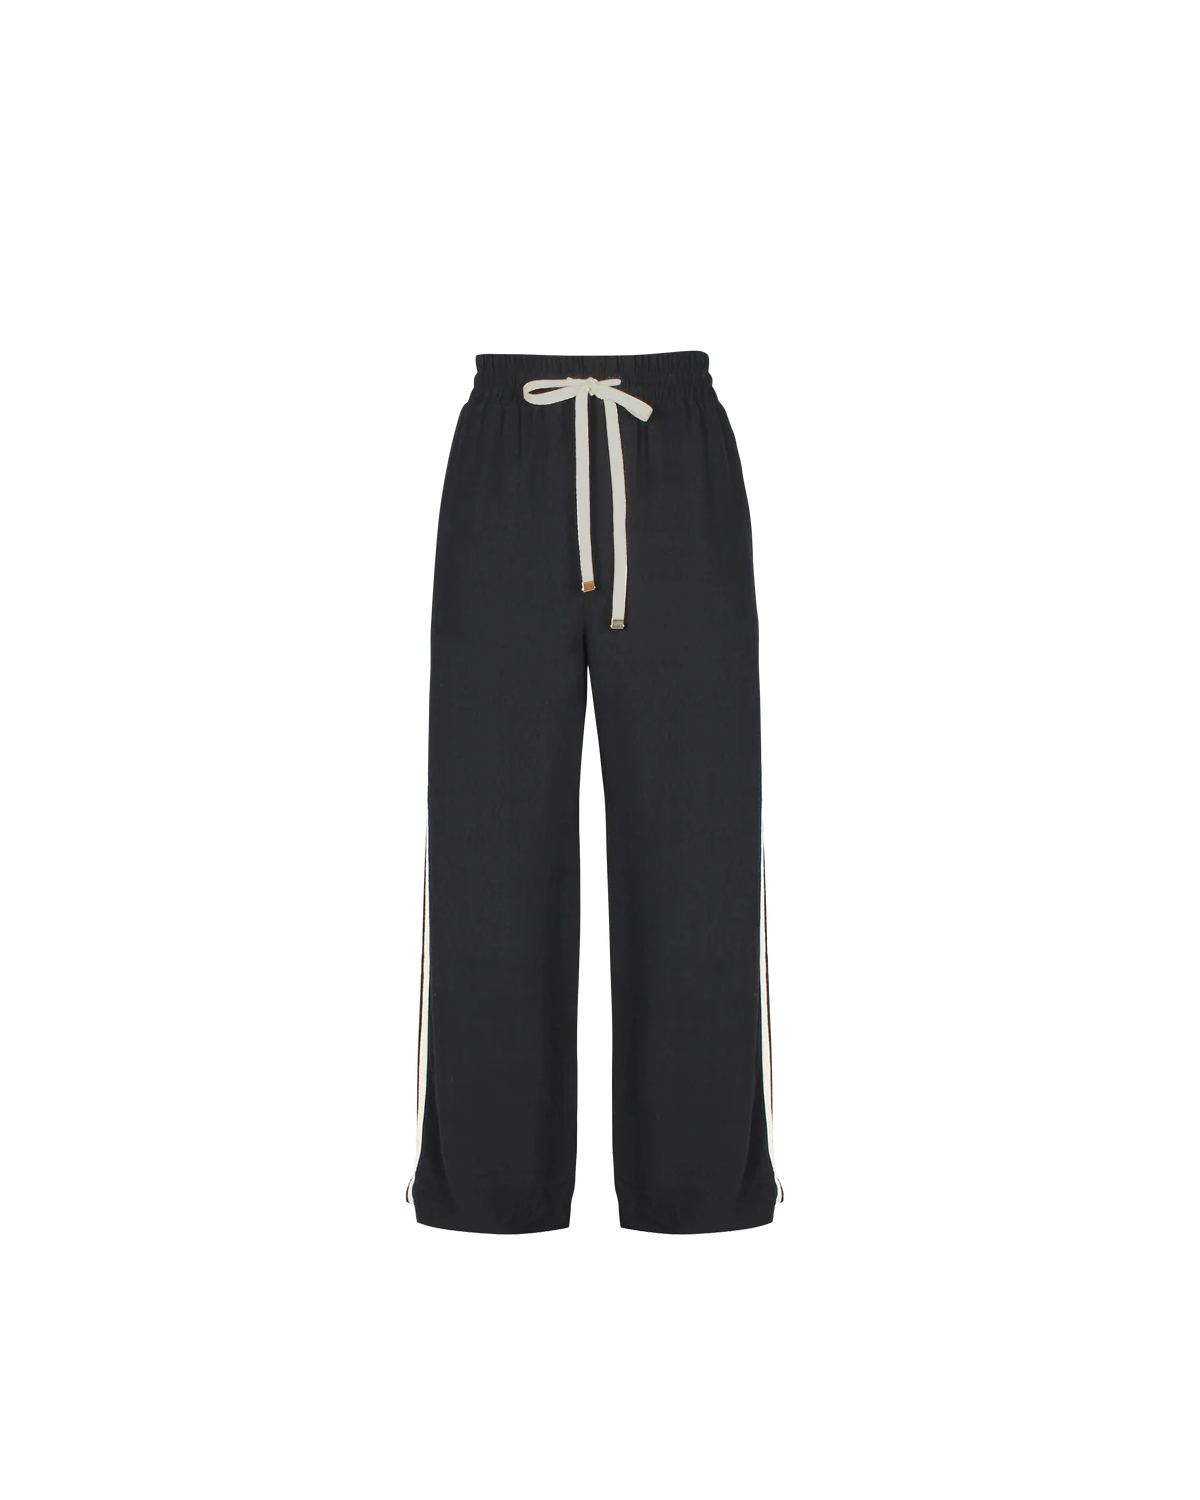 Y-3 x Adidas Wide Leg Pants - Black, 22 Rise Pants, Clothing